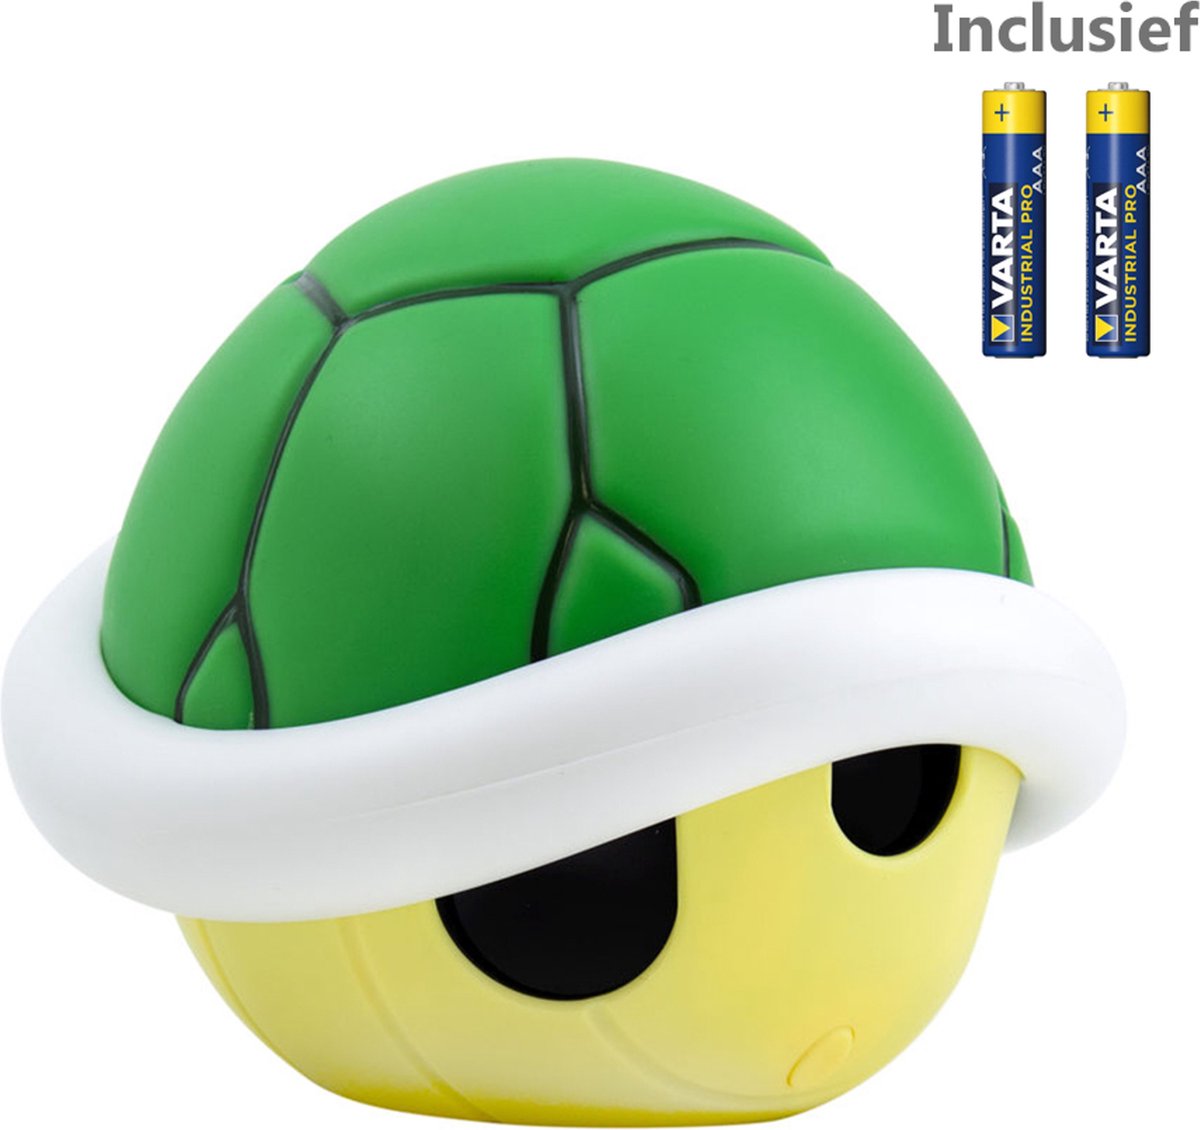 Paladone Tafellamp - Nintendo - Wit En Groen Paladone Tafellamp - Nintendo - Wit En Groen